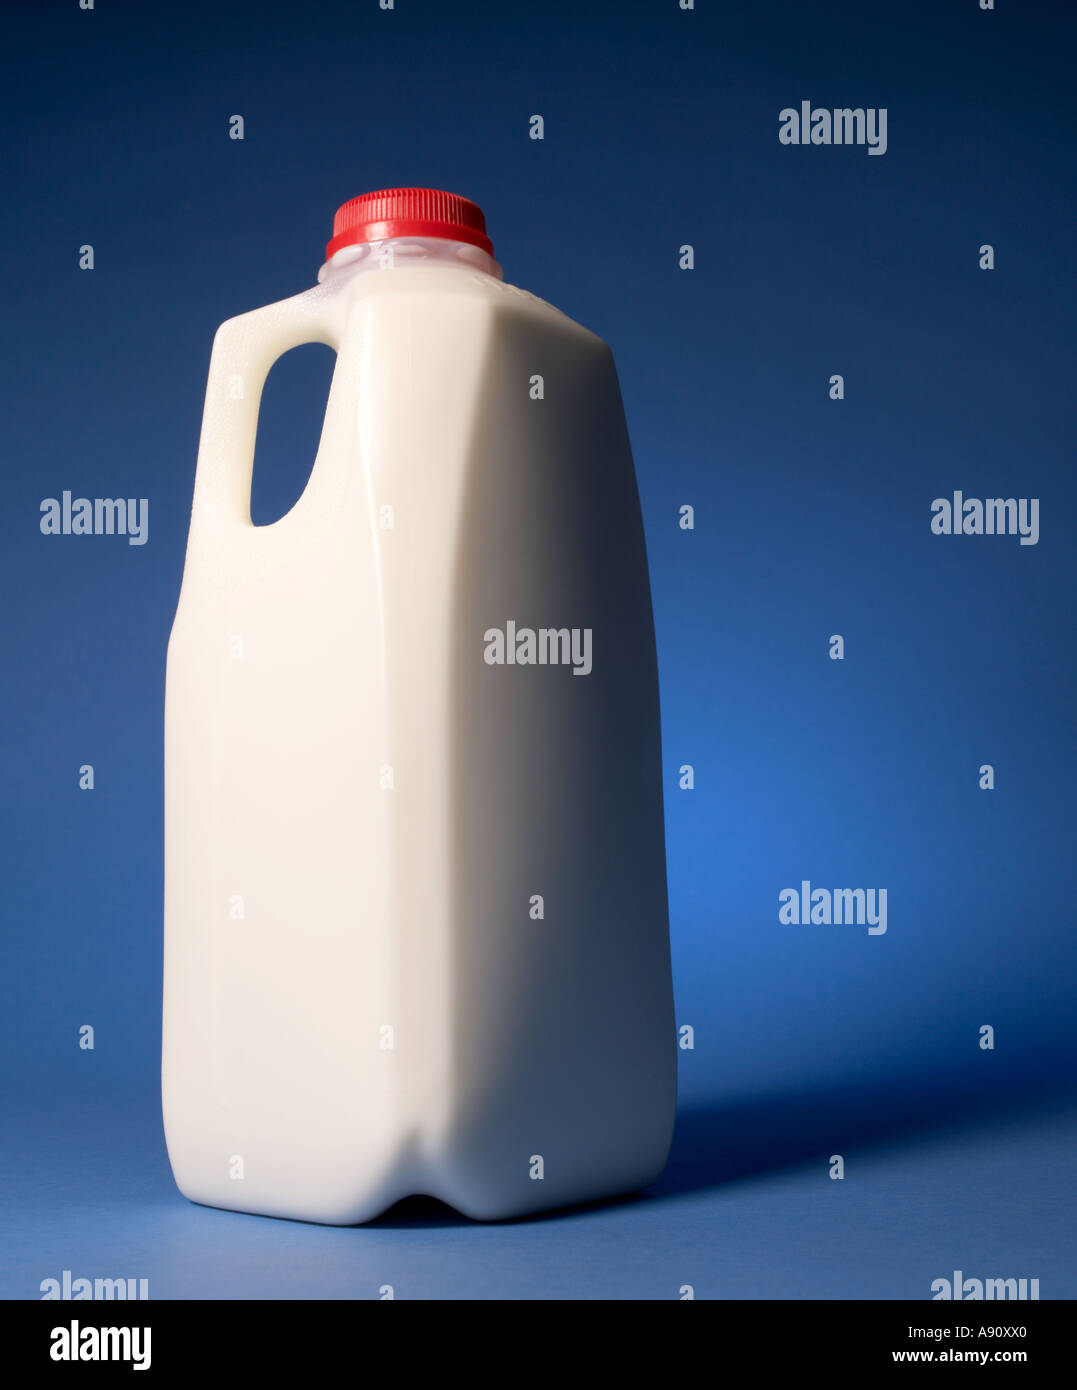 https://c8.alamy.com/comp/A90XX0/half-gallon-of-milk-A90XX0.jpg